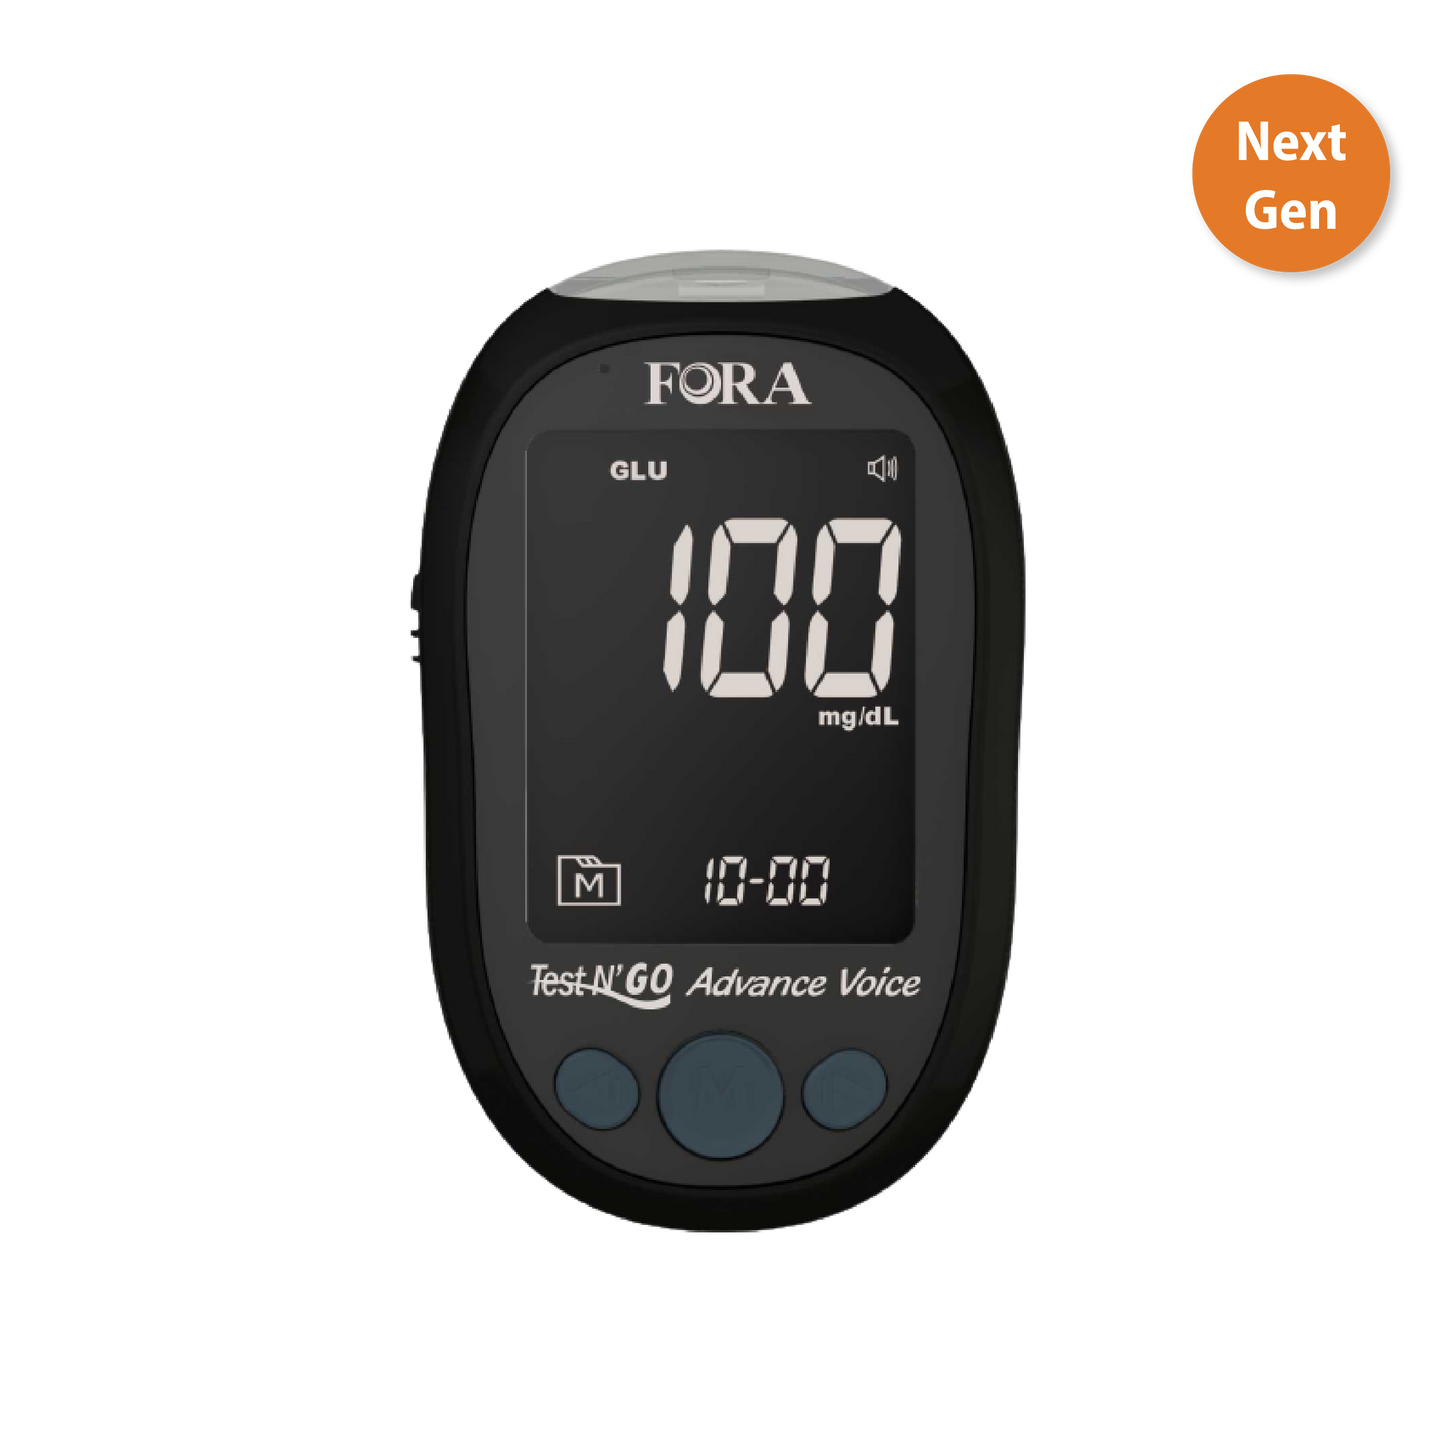 【Next-Gen】FORA Test N'GO Advance Voice Blood Glucose and Blood Ketone Meter (Meter Only)